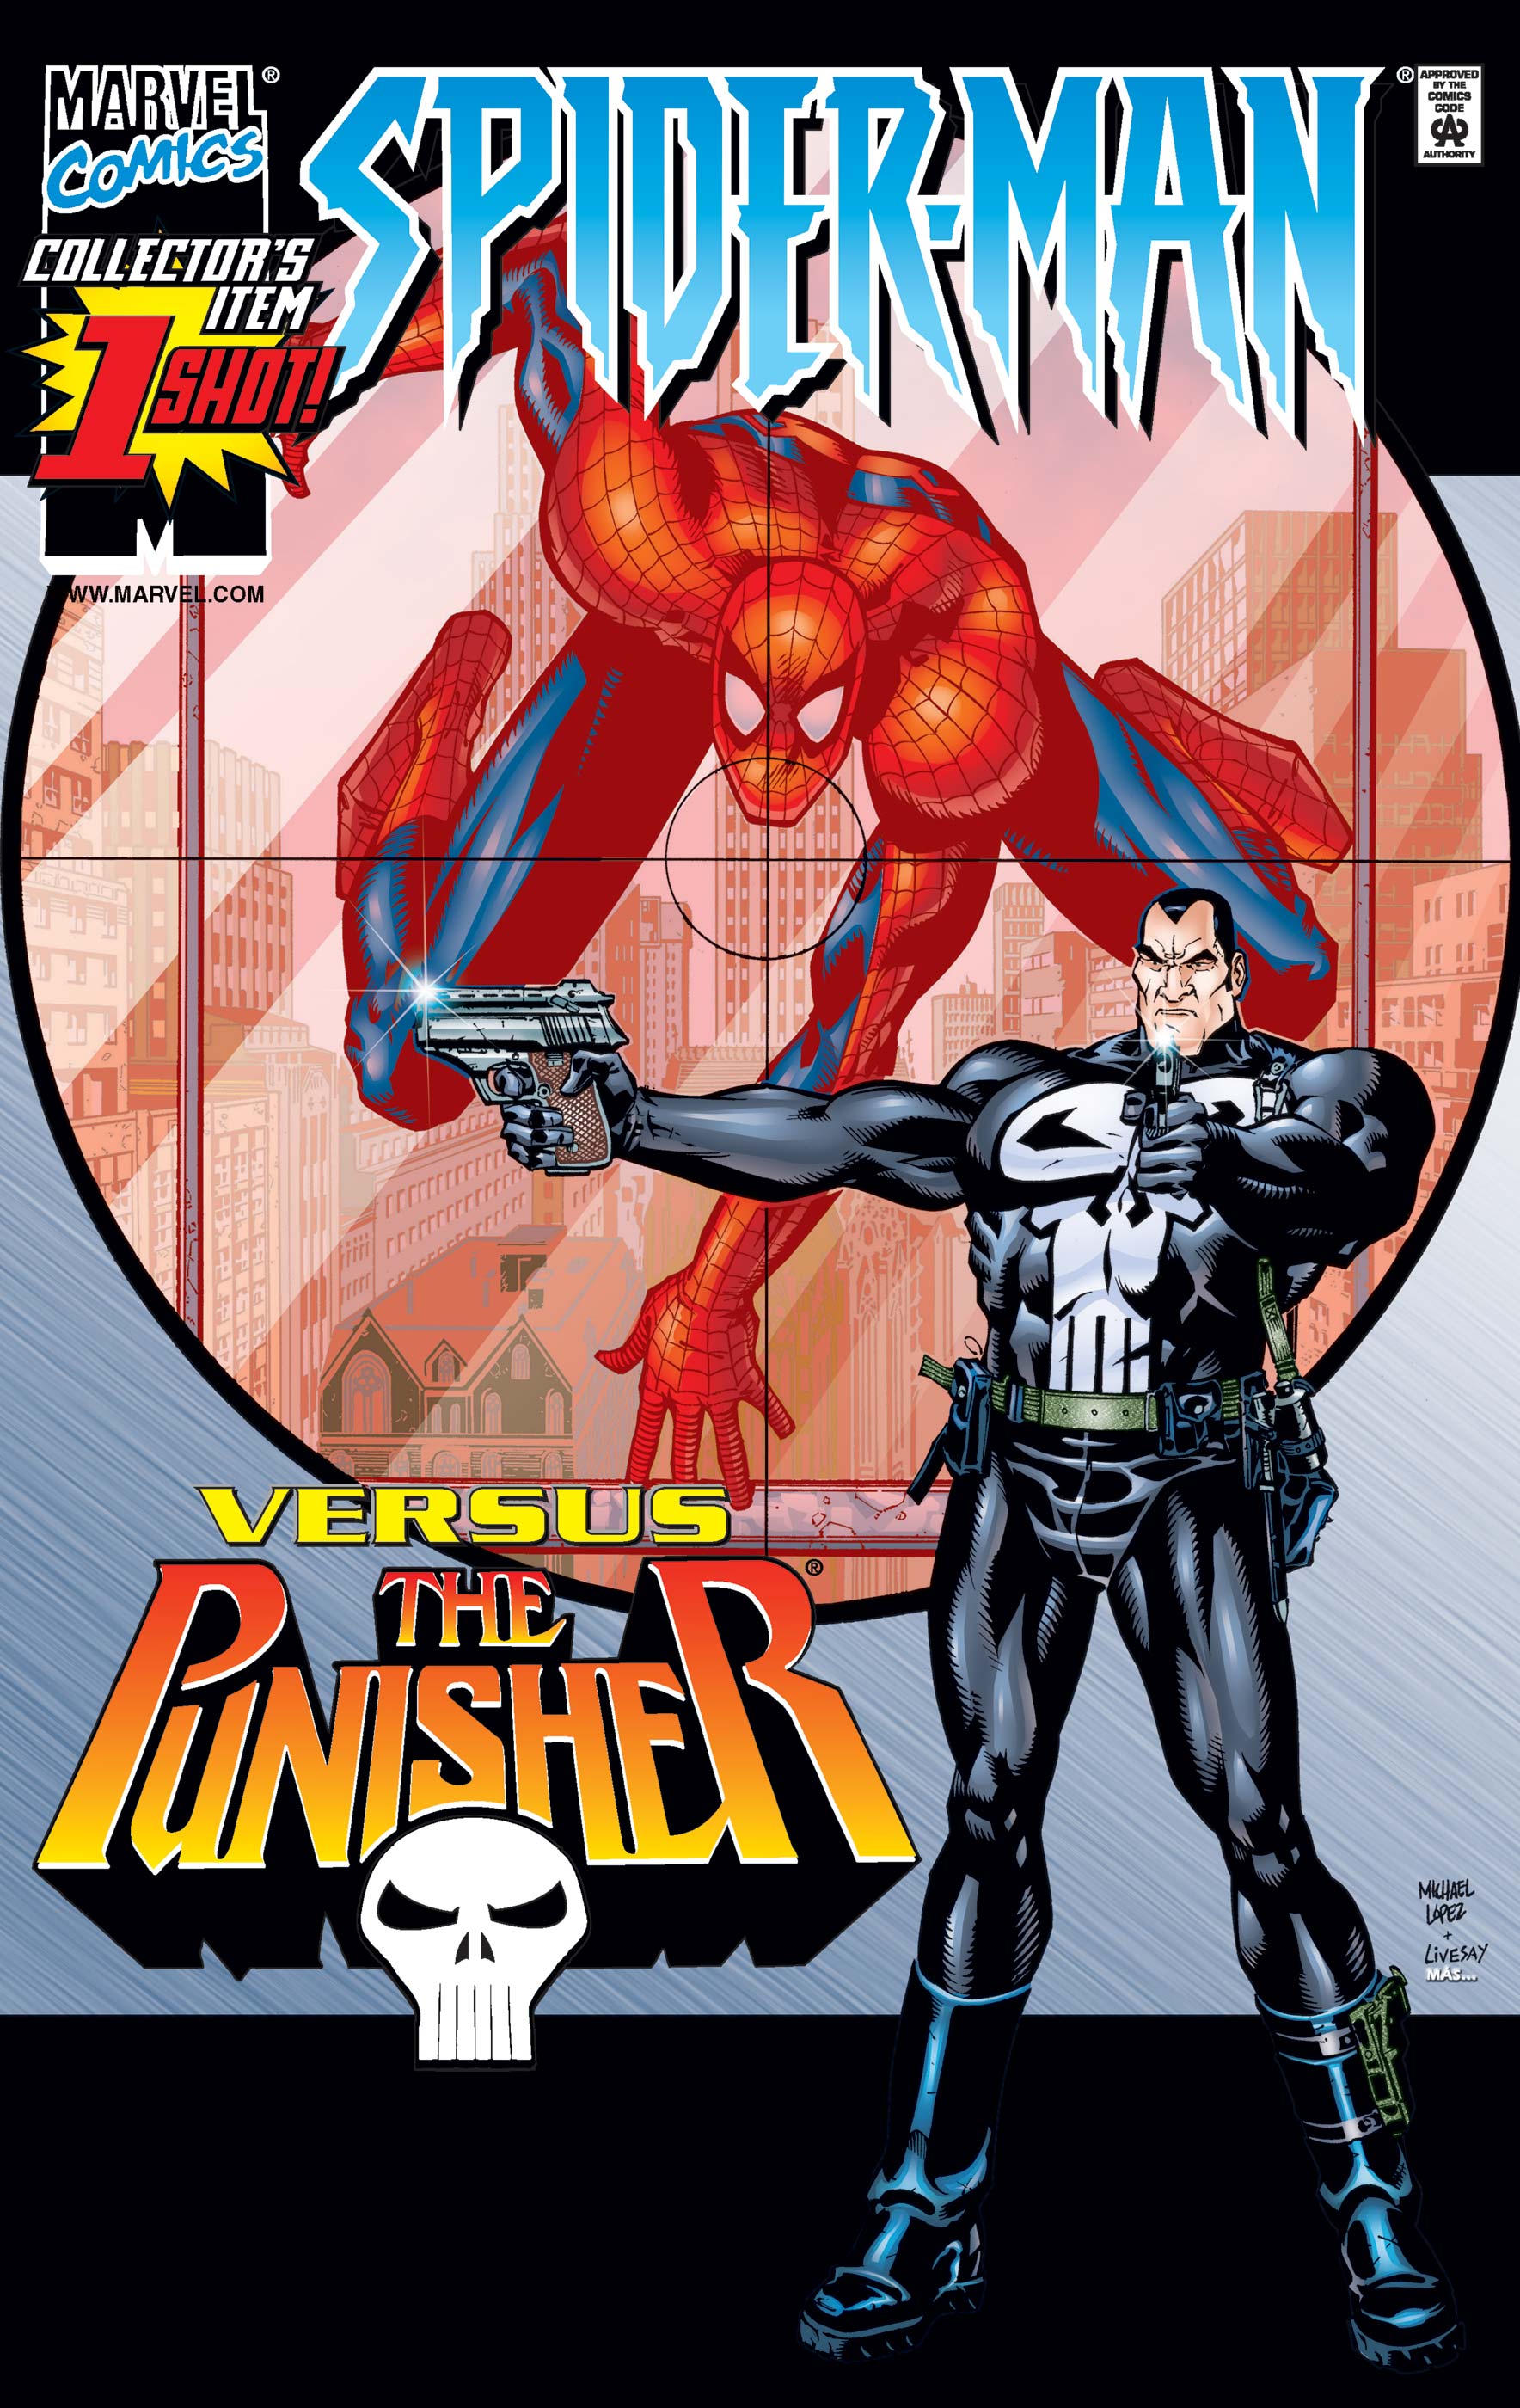 Punisher vs spiderman